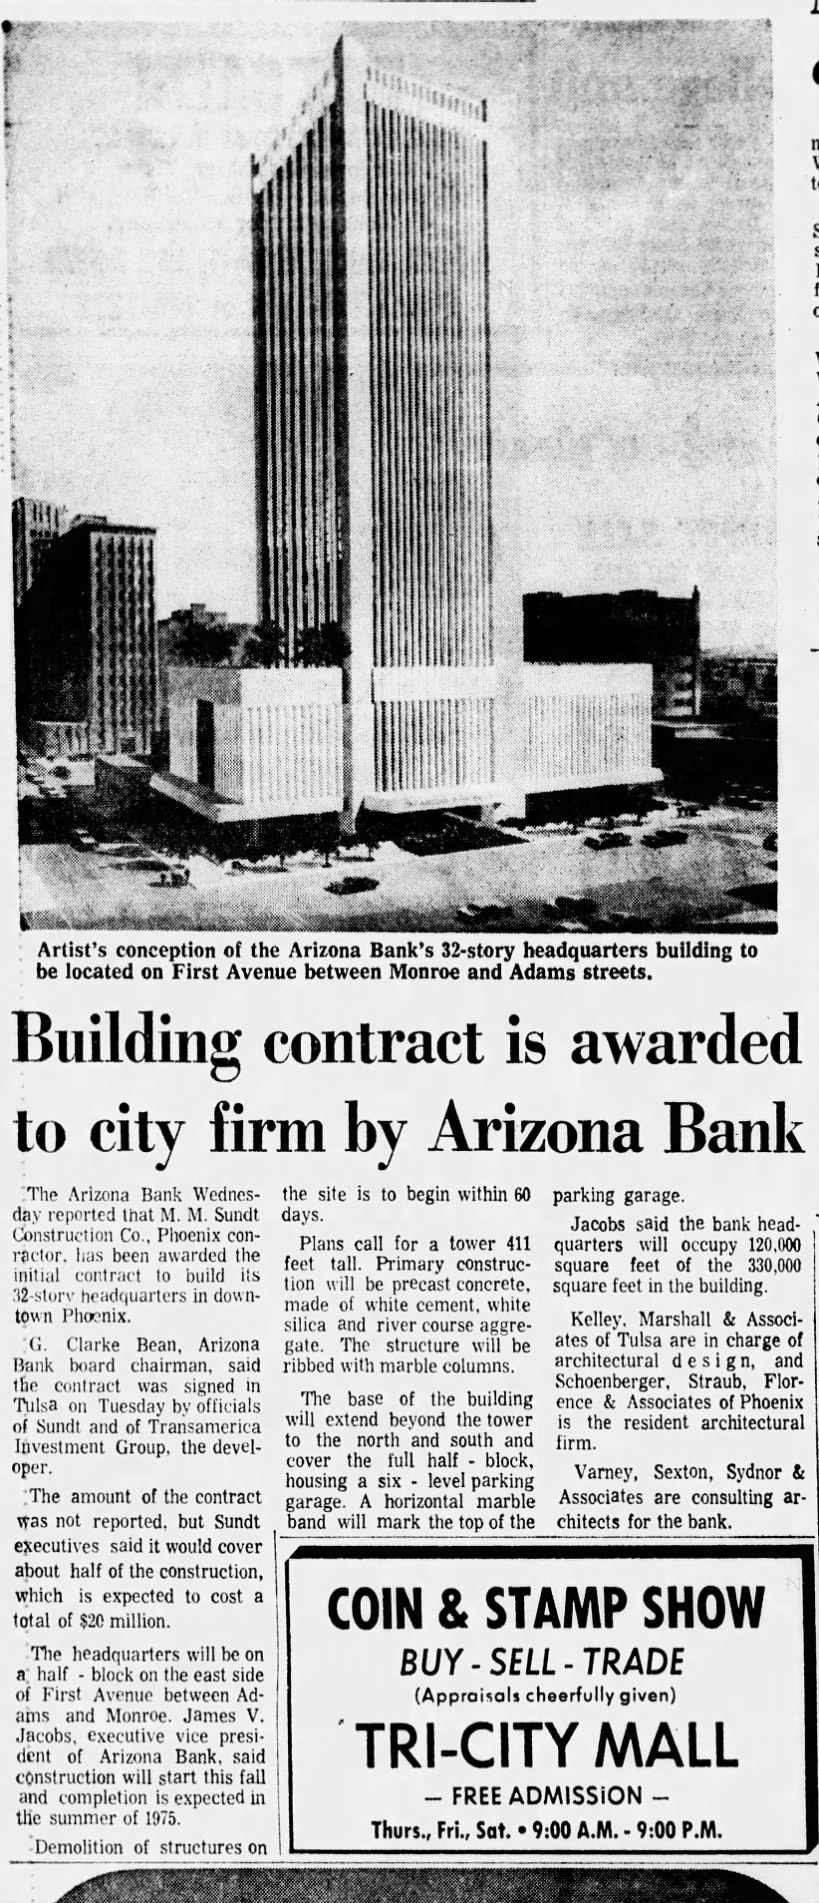 Arizona Bank Building